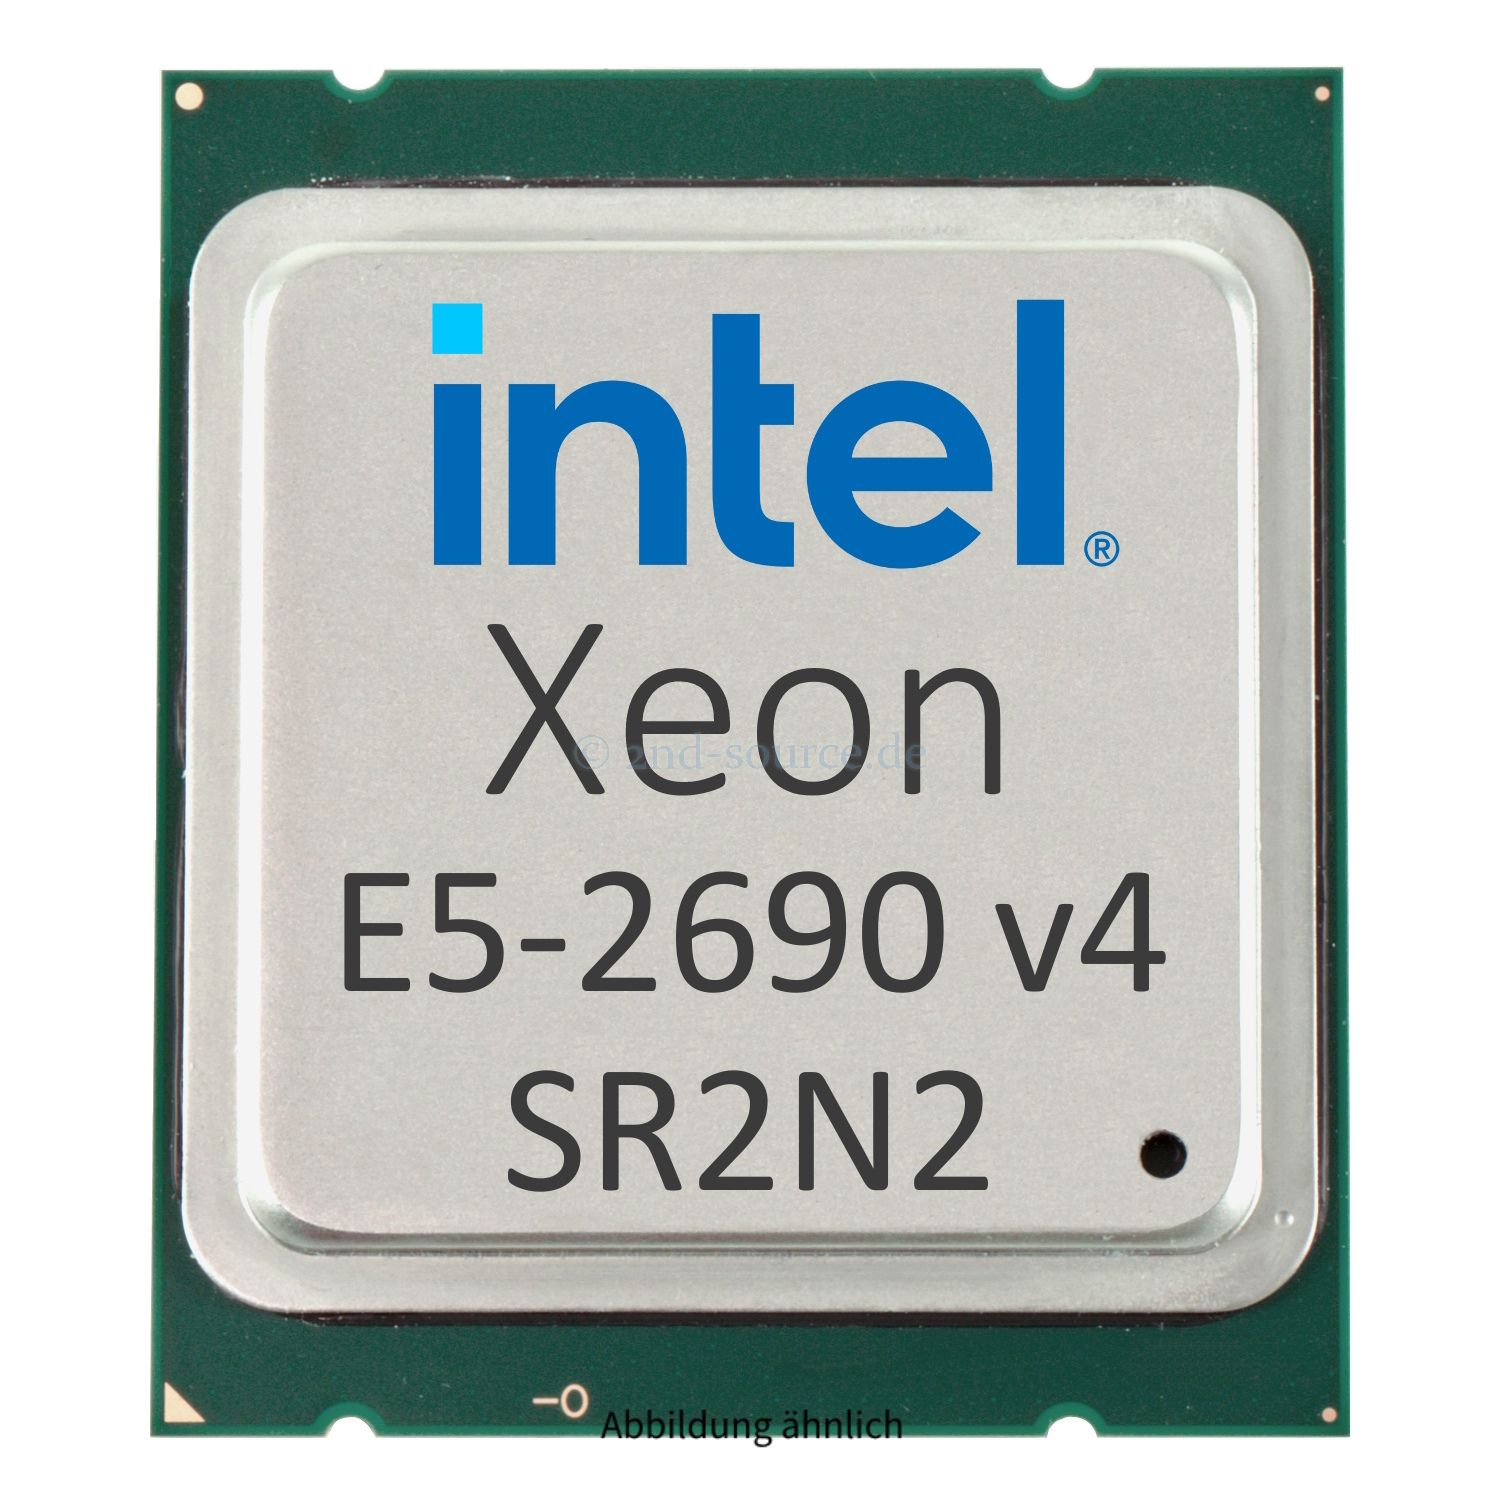 Intel Xeon E5-2690 v4 2.60GHz 35MB 14-Core CPU 135W SR2N2 CM8066002030908